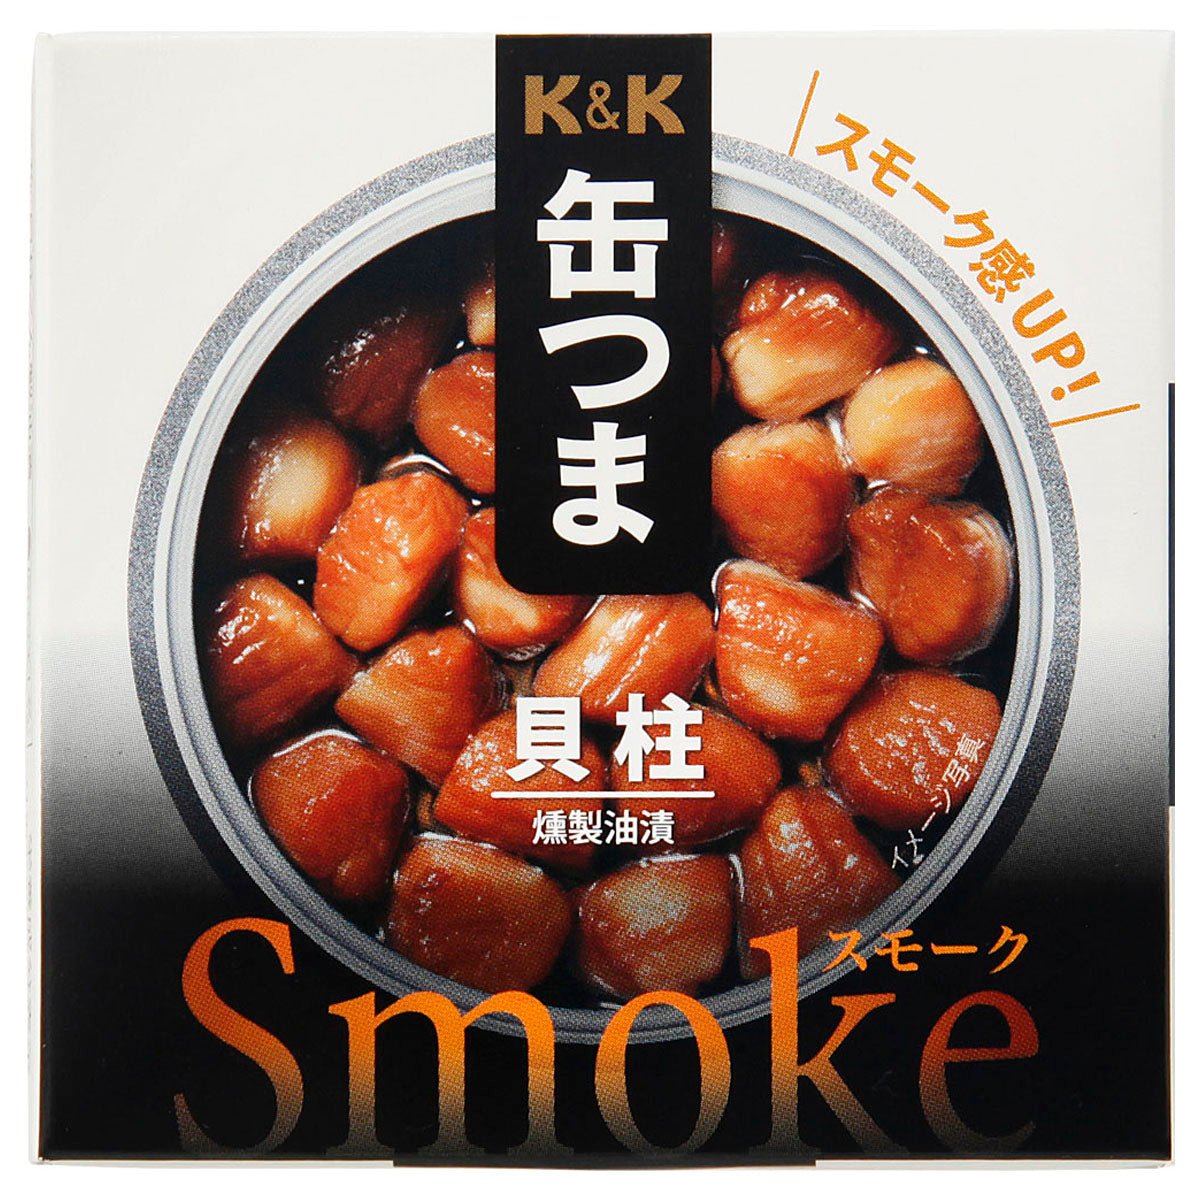 K & k late tsuma fumar mariscos